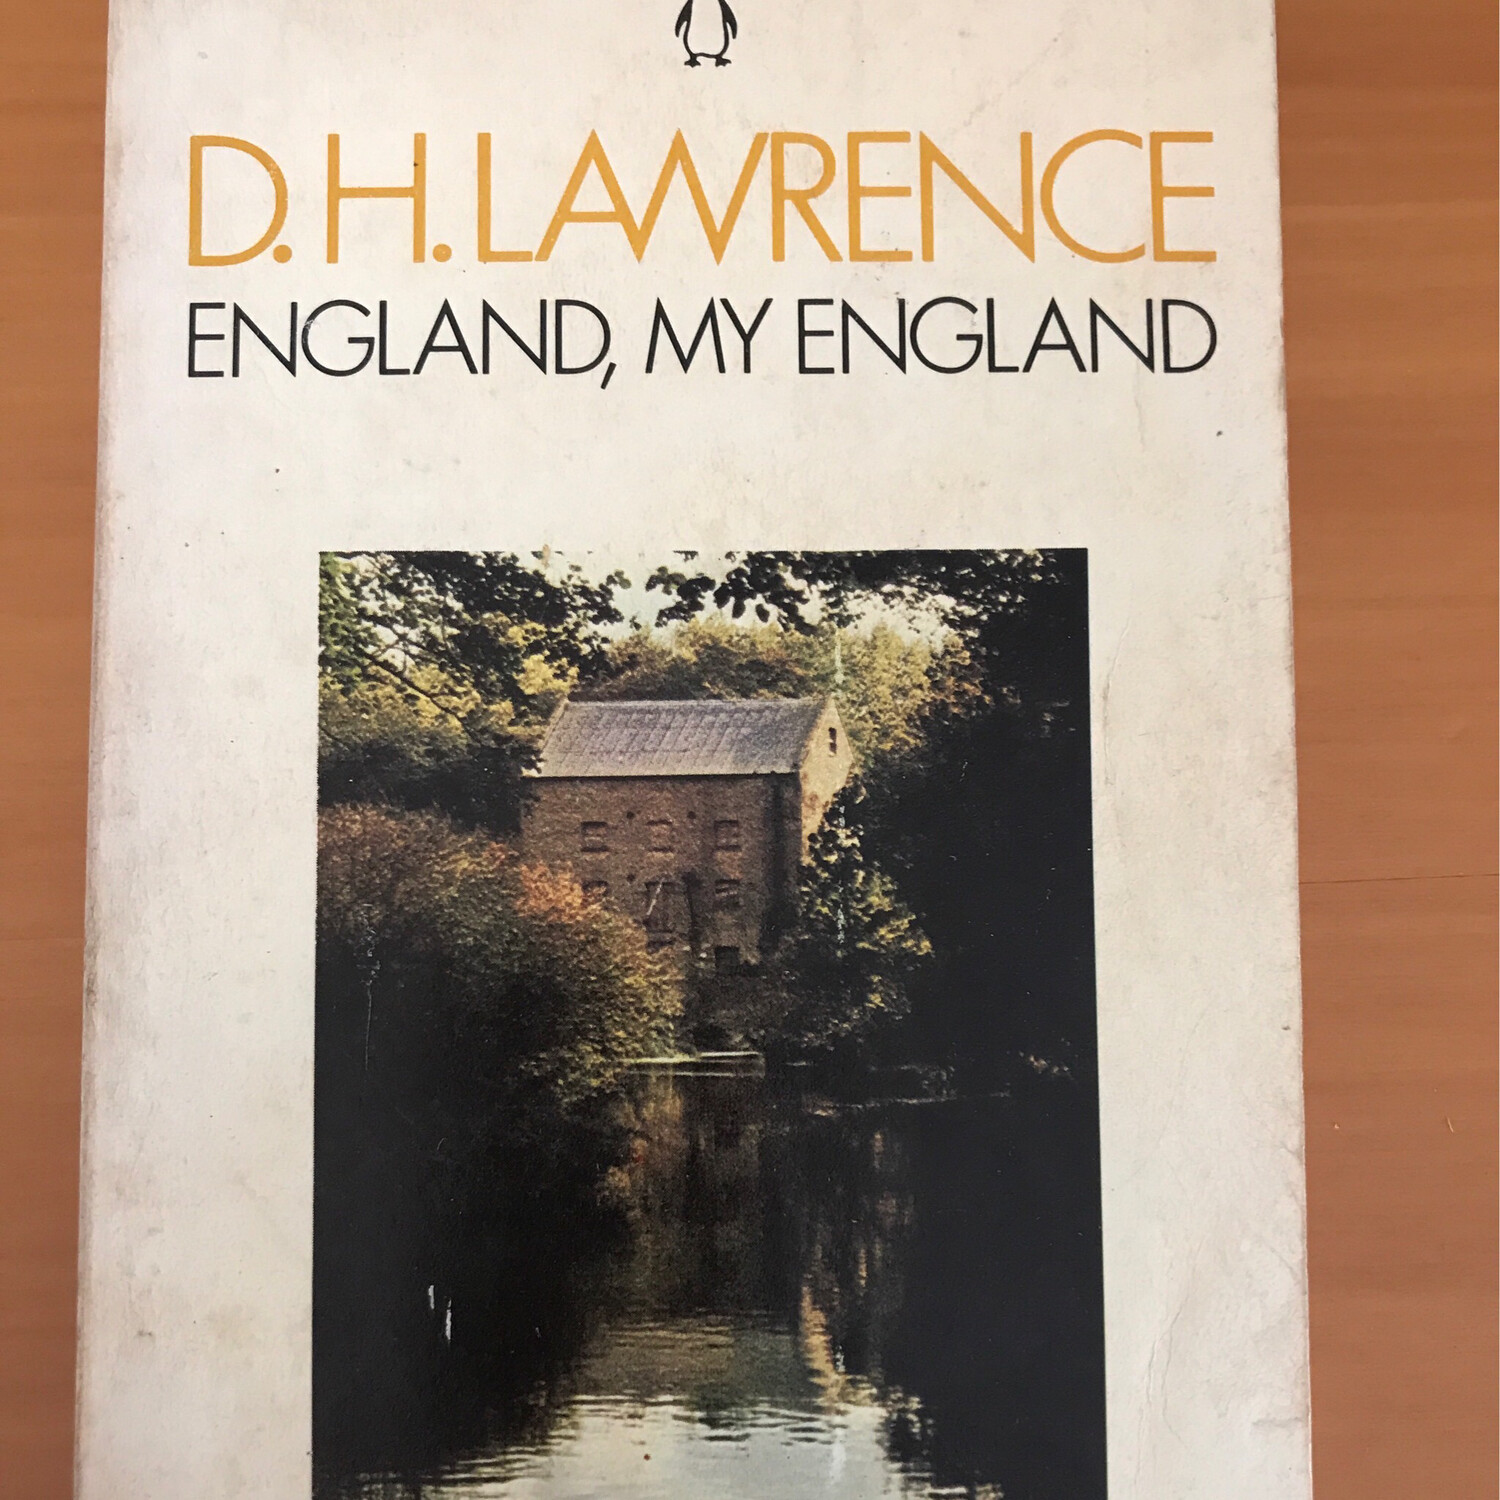 England, My England, D. H. Lawrence